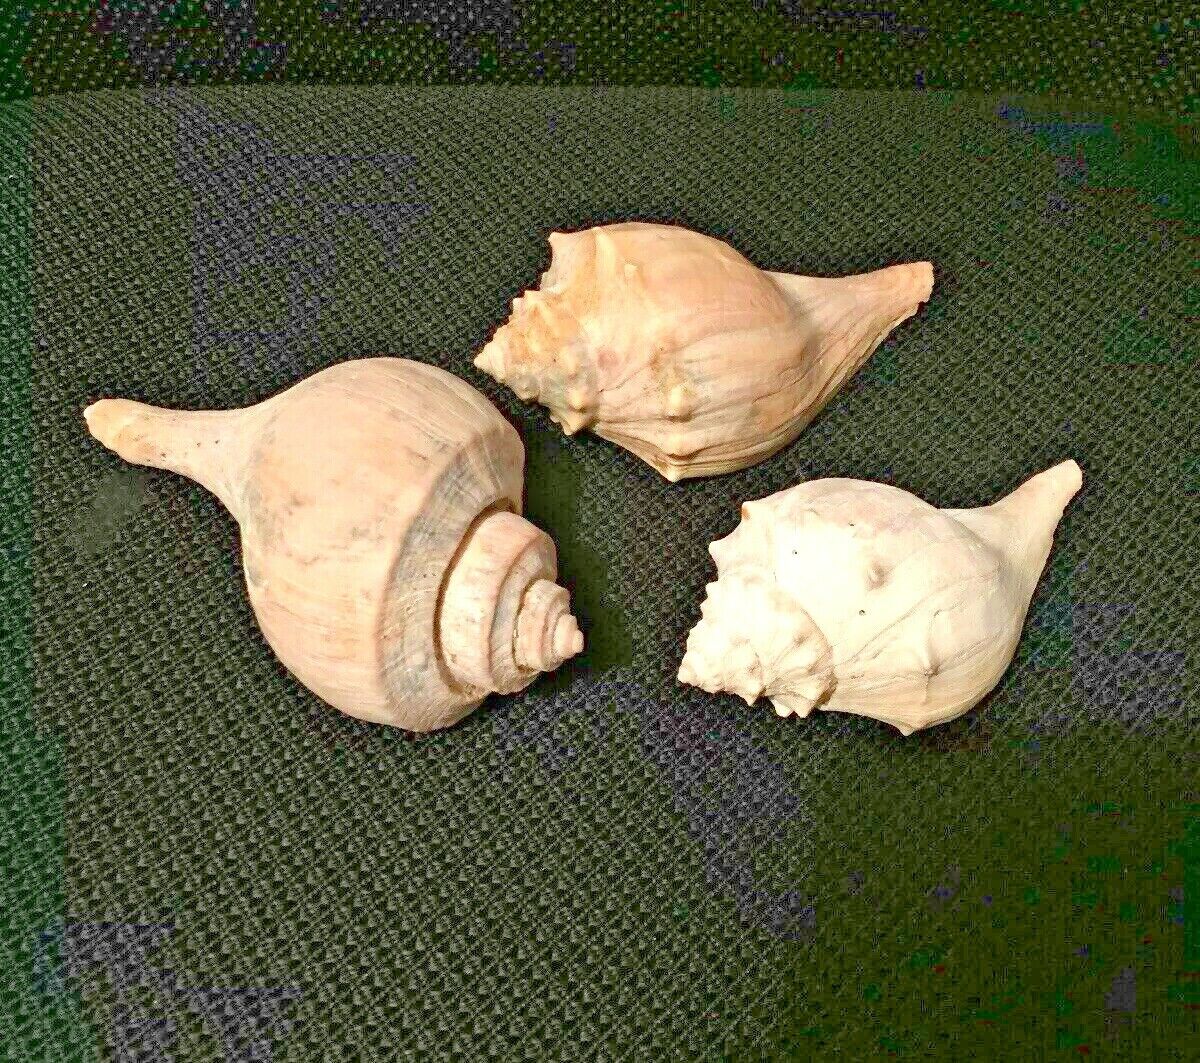 Lot of 3 Medium Queen Conch Sea Shells 4"- 5" Marine Ocean Seashore Decor Crafts Без бренда - фотография #2